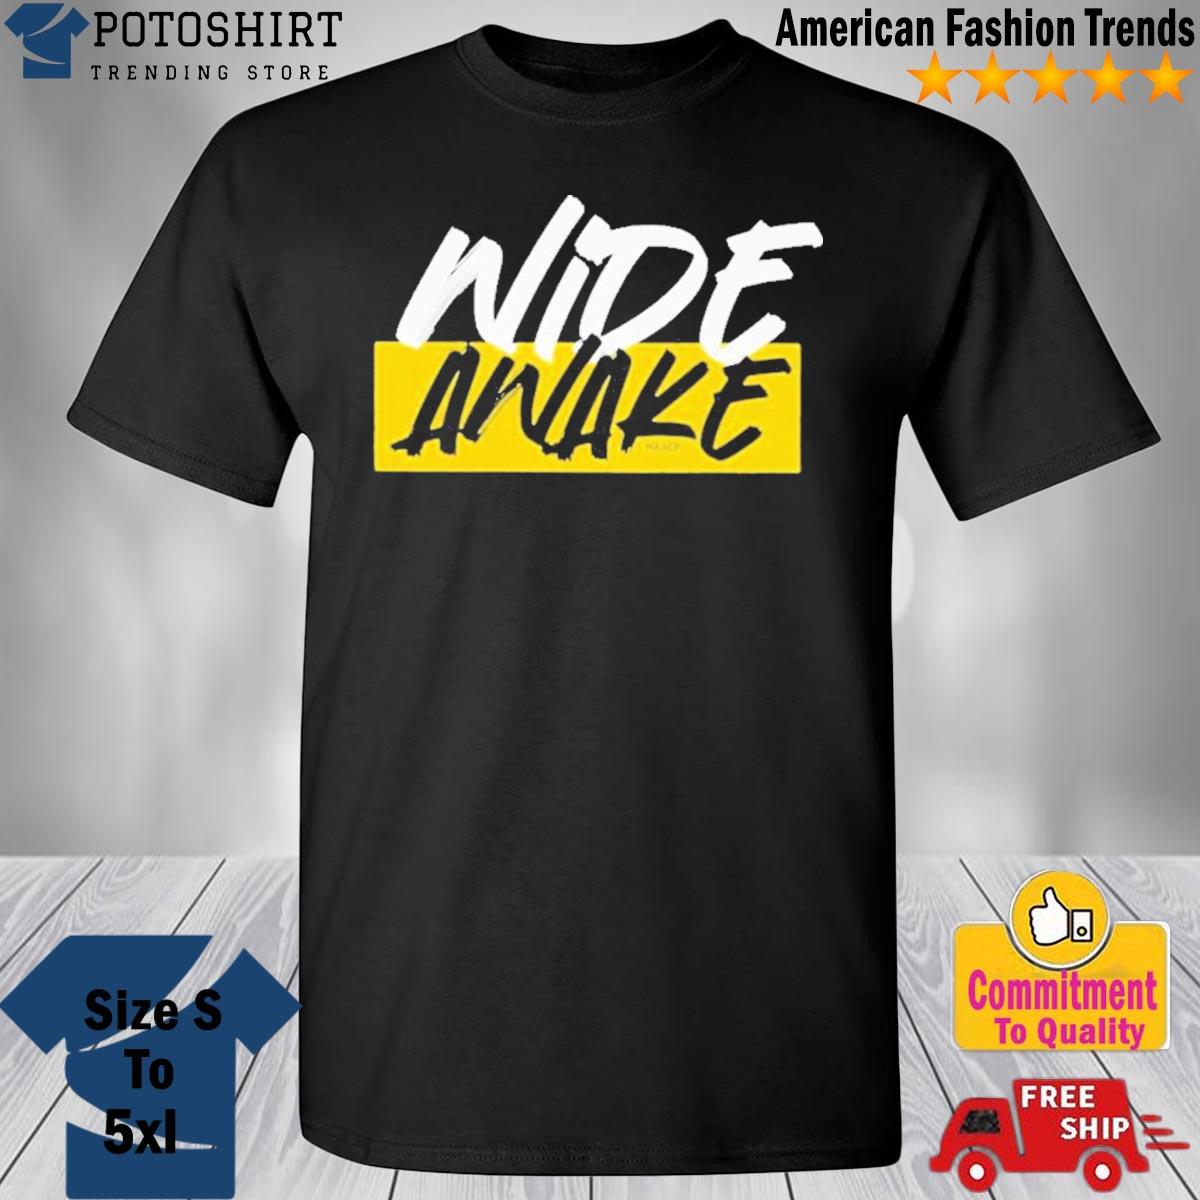 Wide Awake T-Shirt